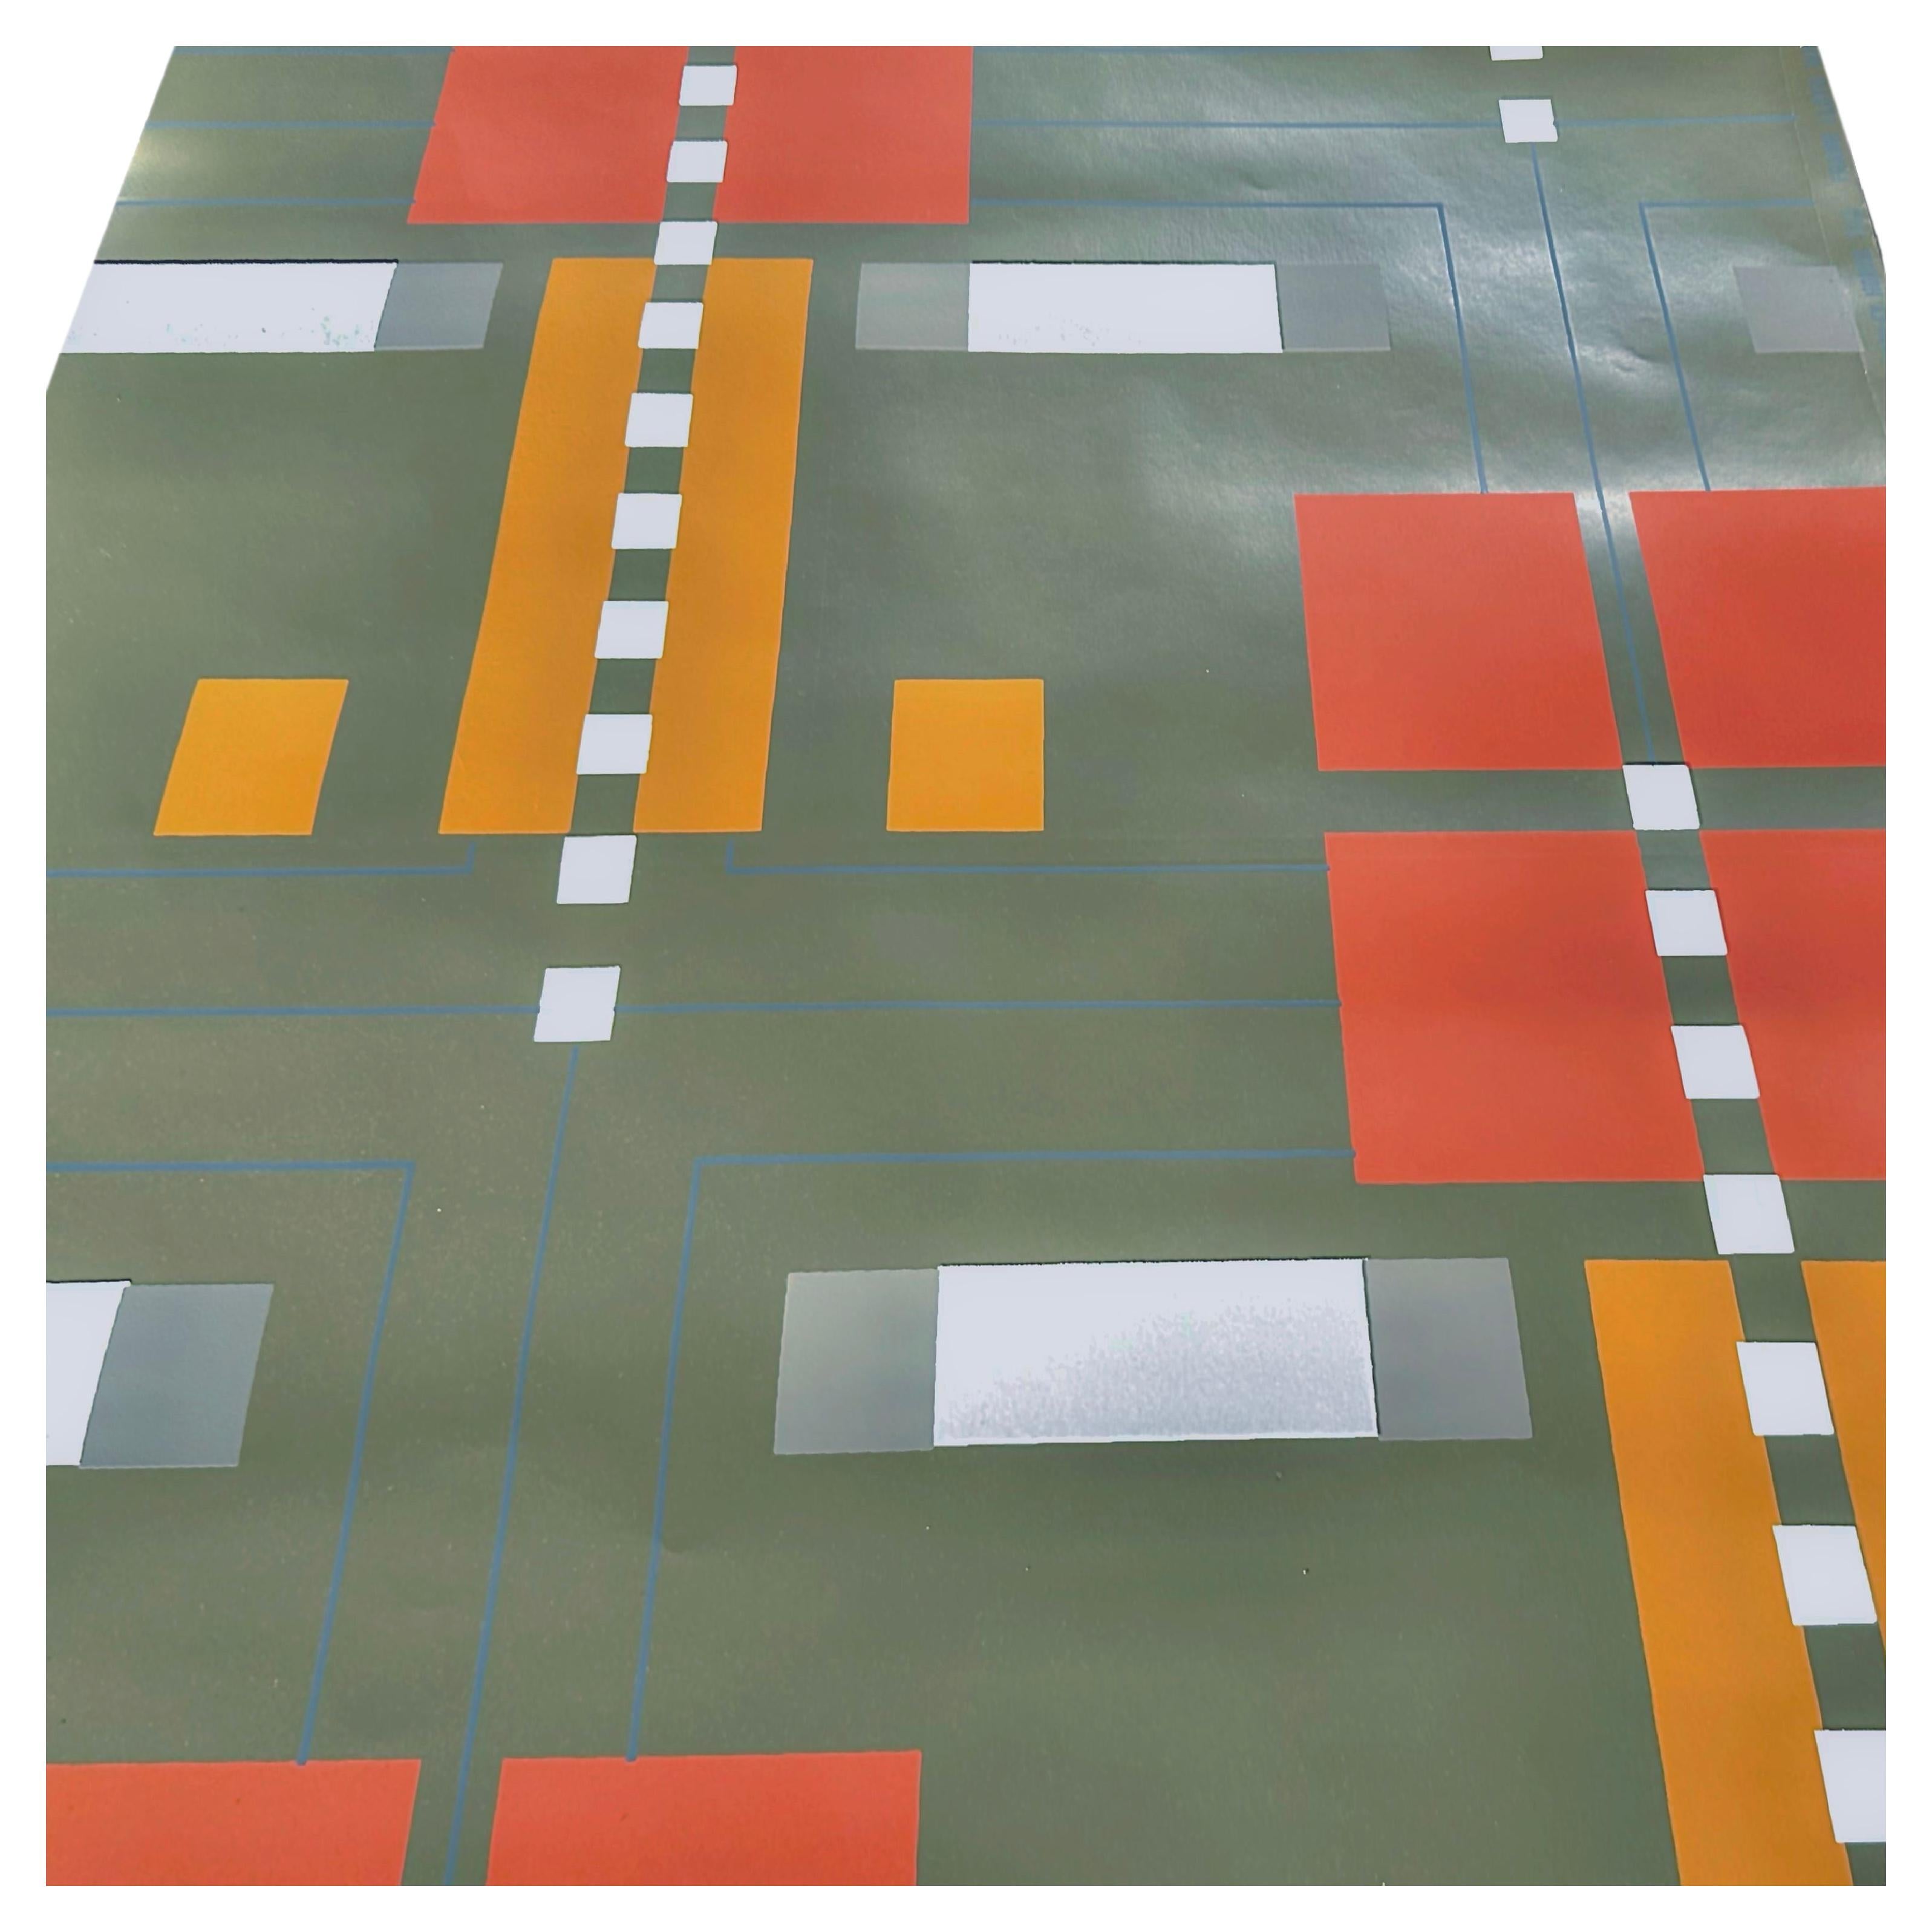 Frank Lloyd Wright ‘Coonley House Tile’ Hand-printed Wallpaper, Schumacher, 1976